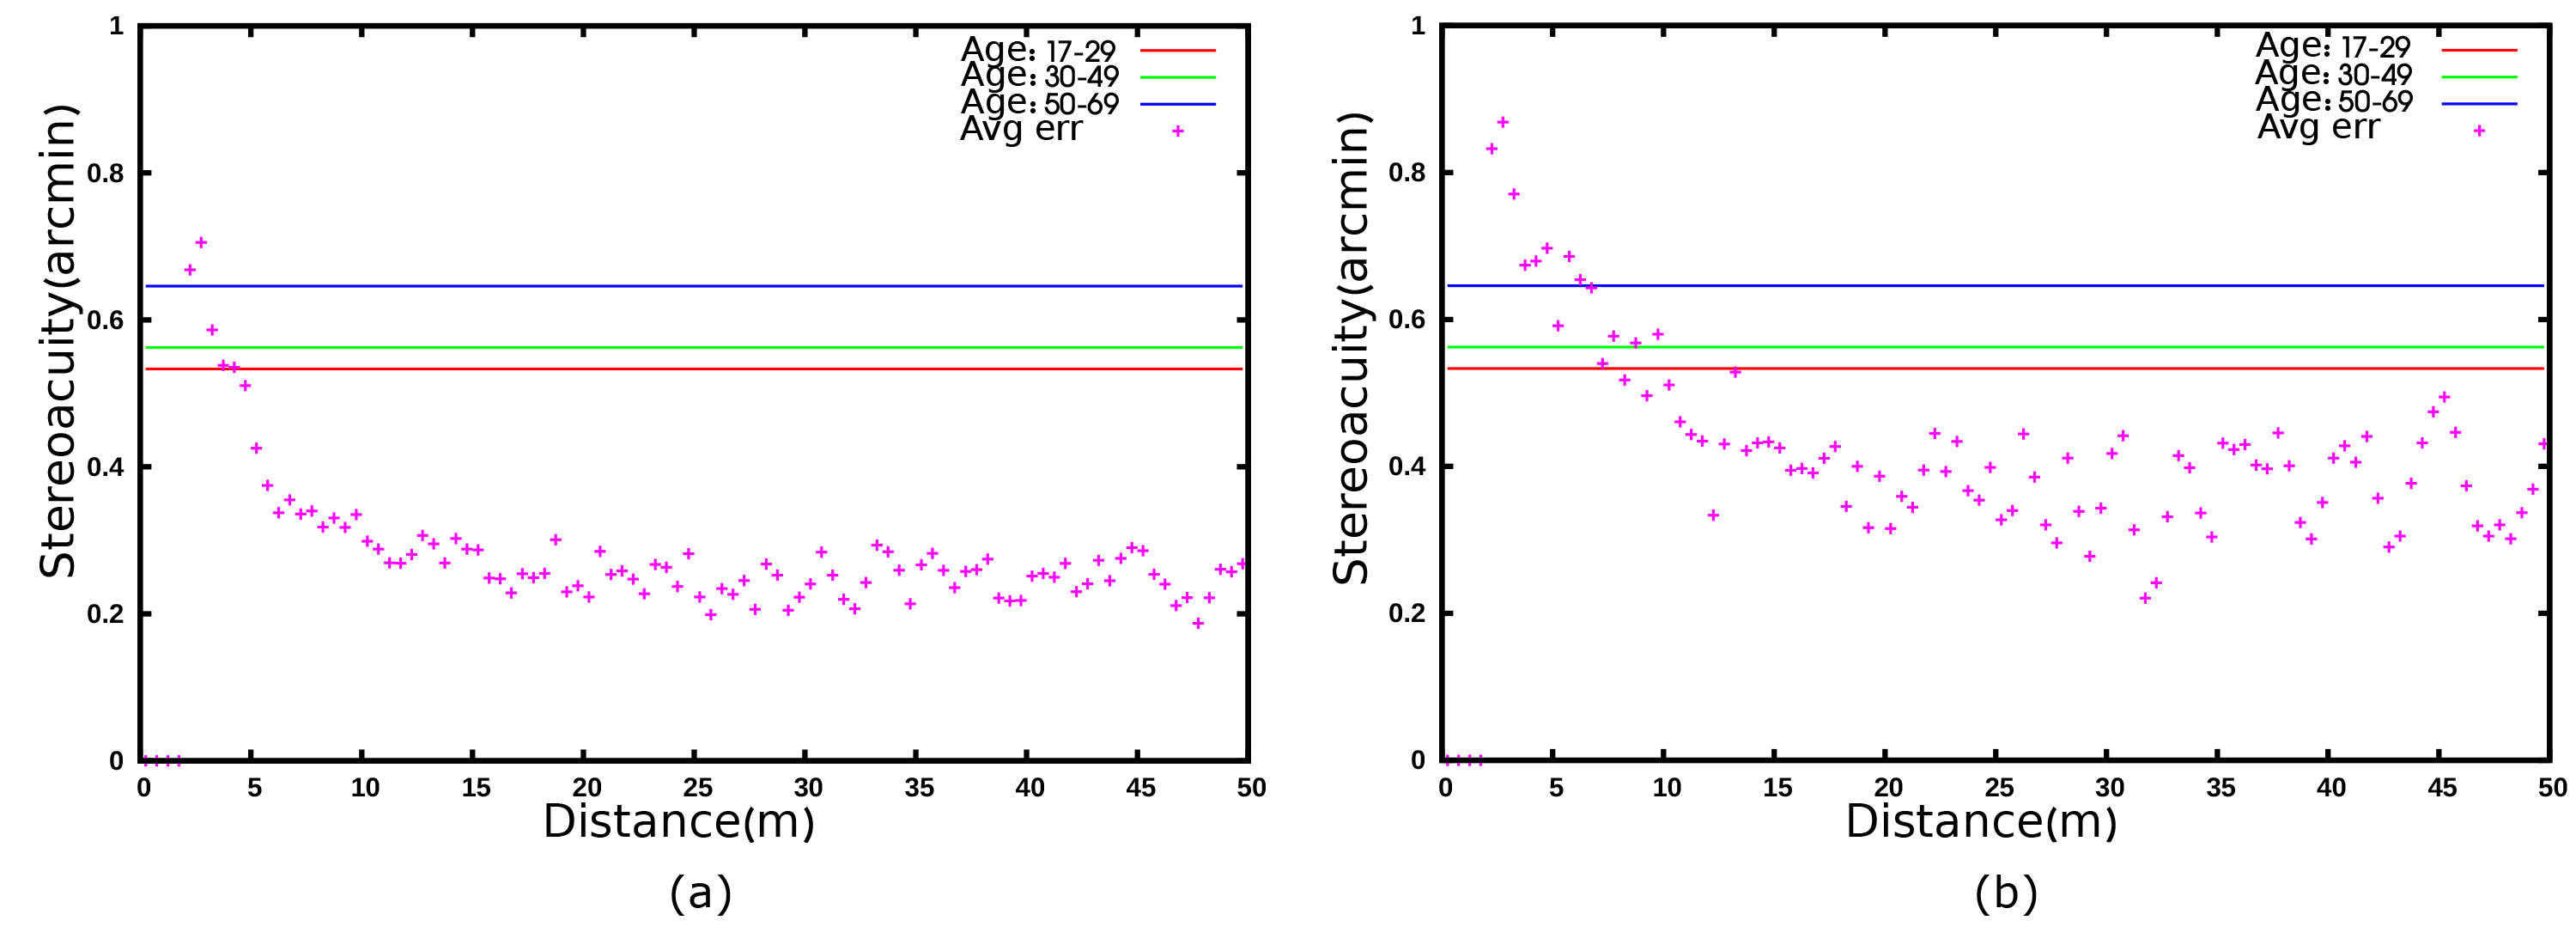 Average relative depth error over distance for the masked image. (a) Average relative depth error by SGBM. (b) Average relative depth error by ADCensusB